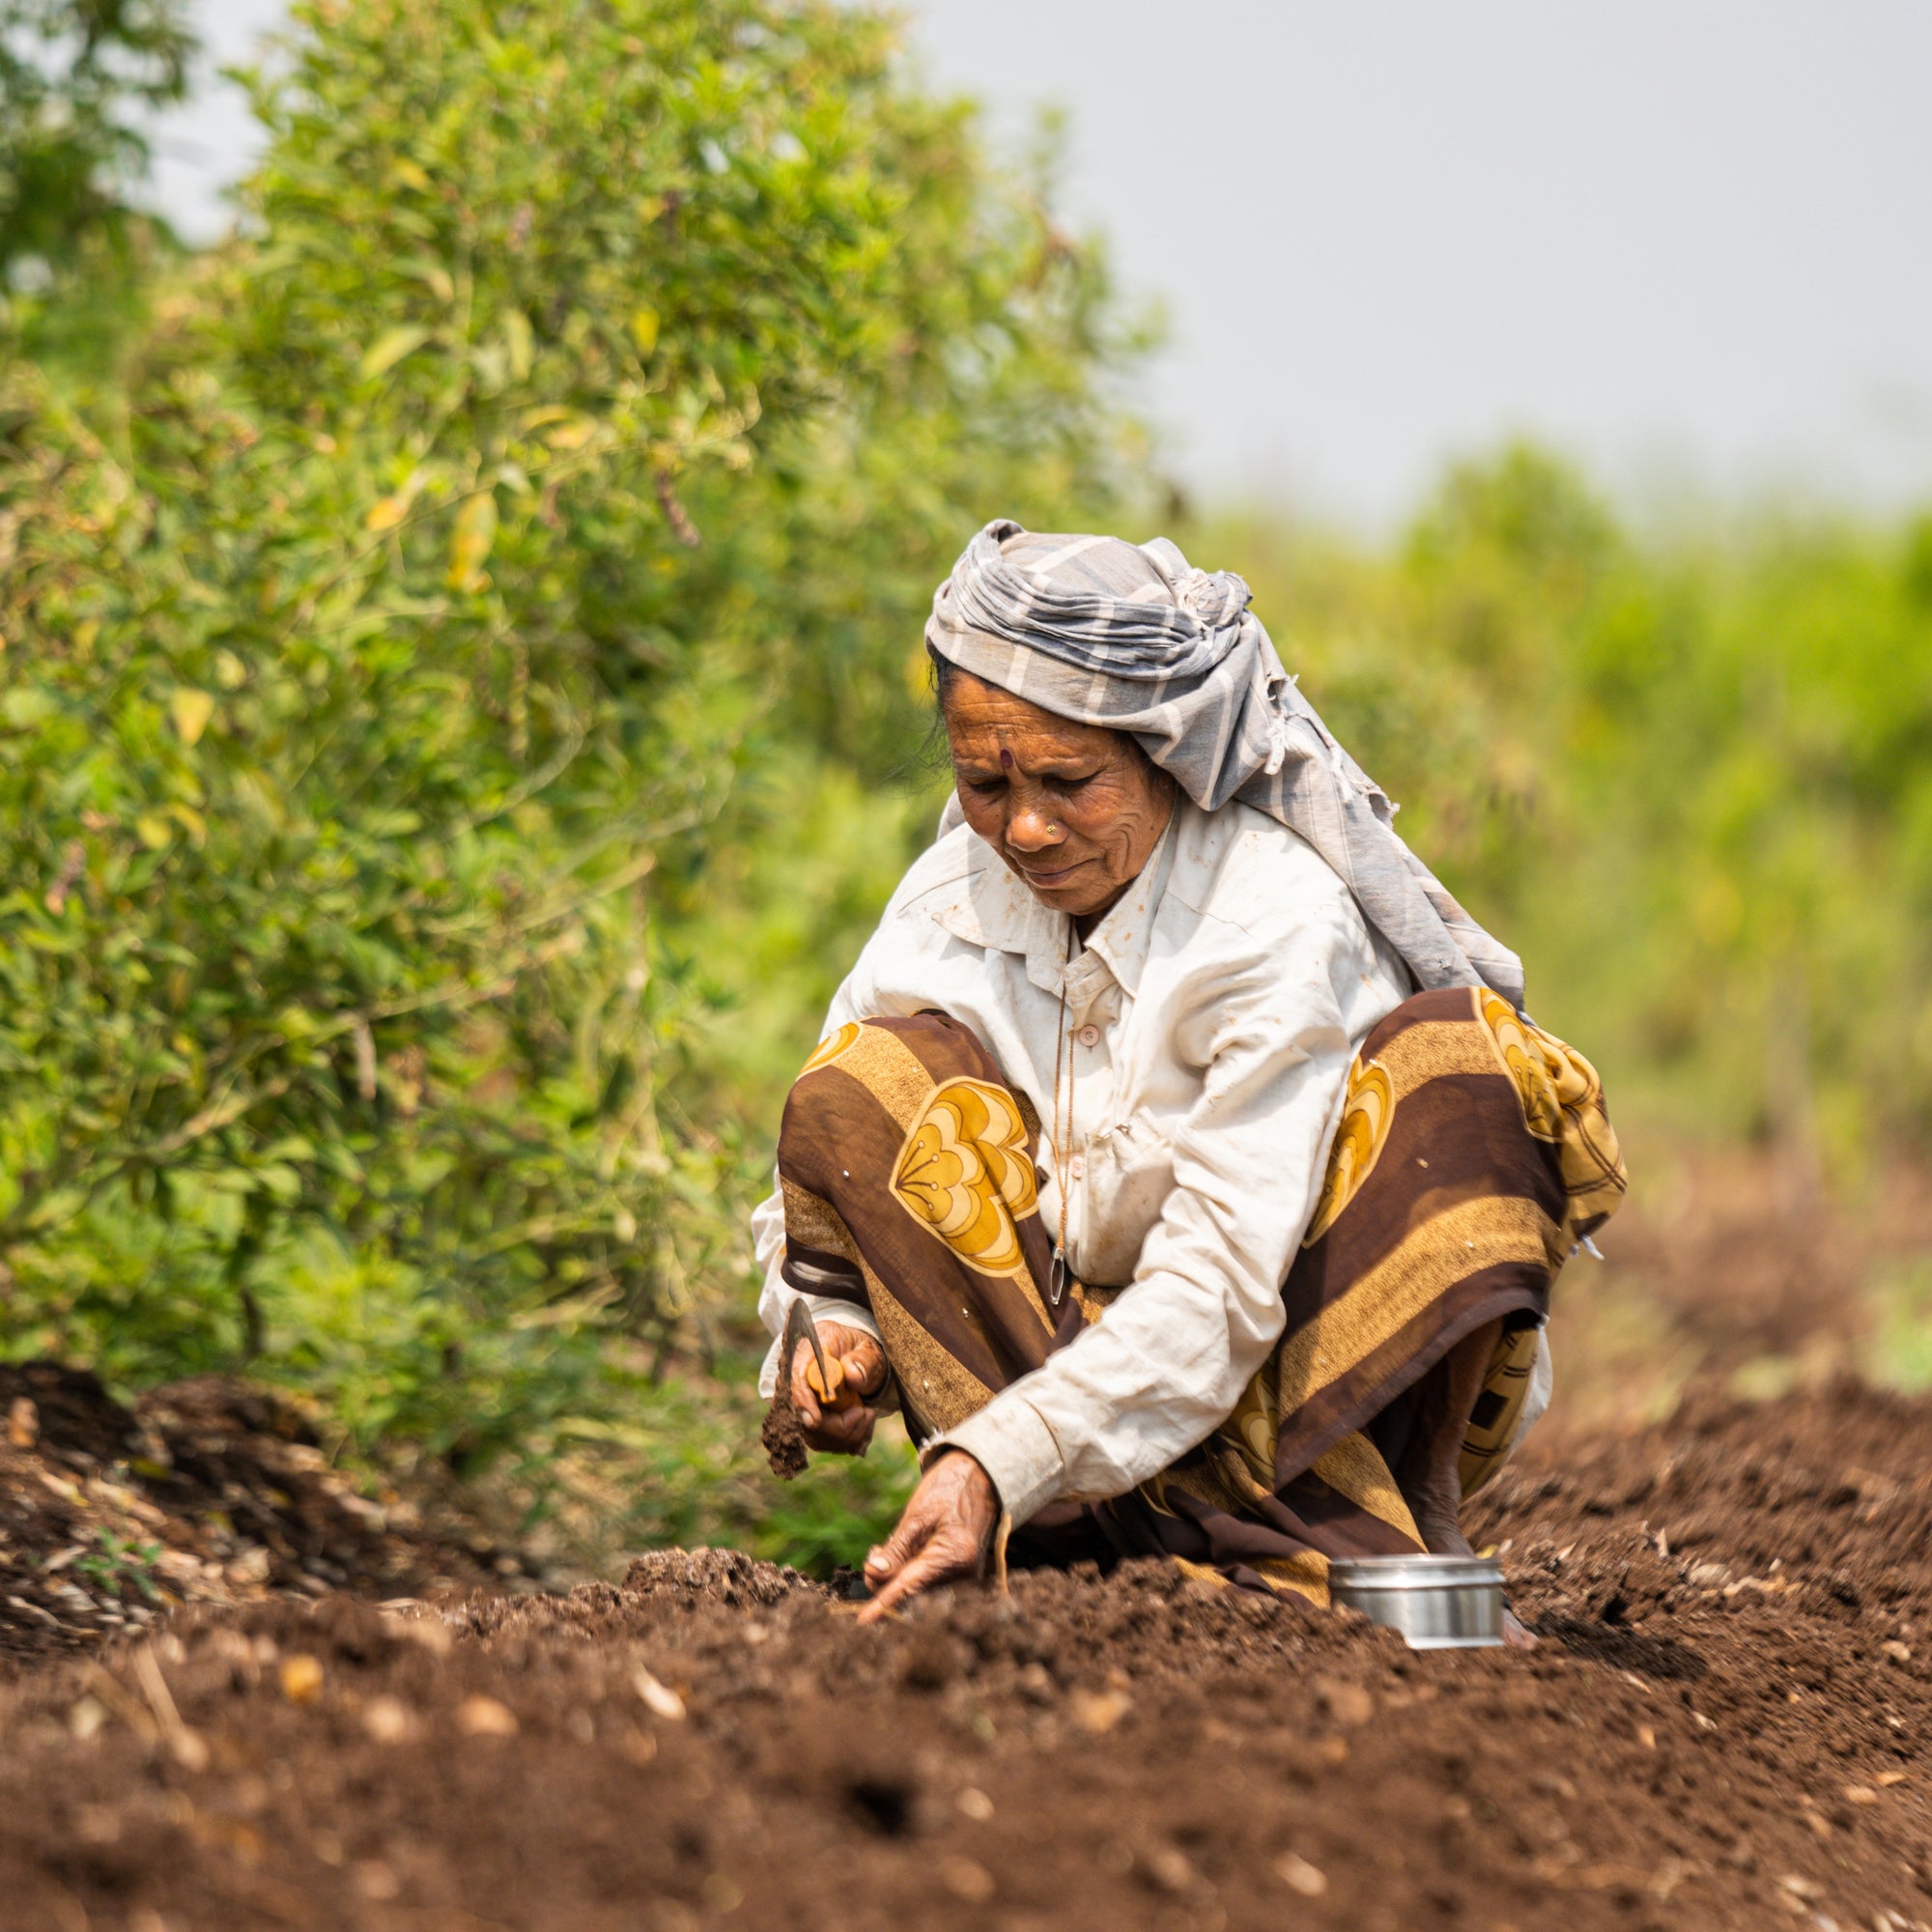 Mulching for soil health - Benefits of Mulching in Organic Farming